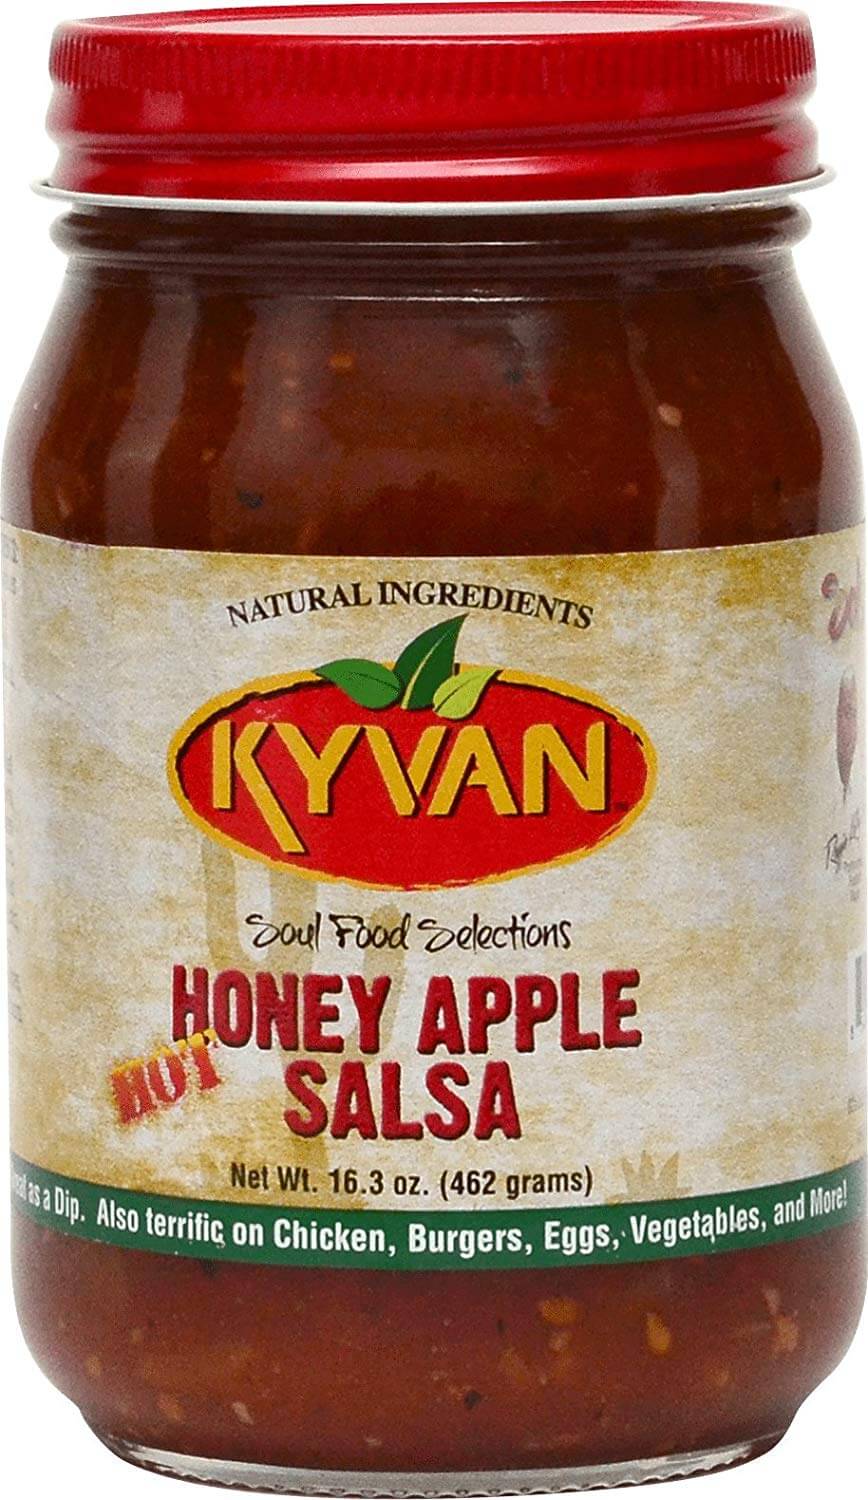 KYVAN Hot Honey Apple Salsa